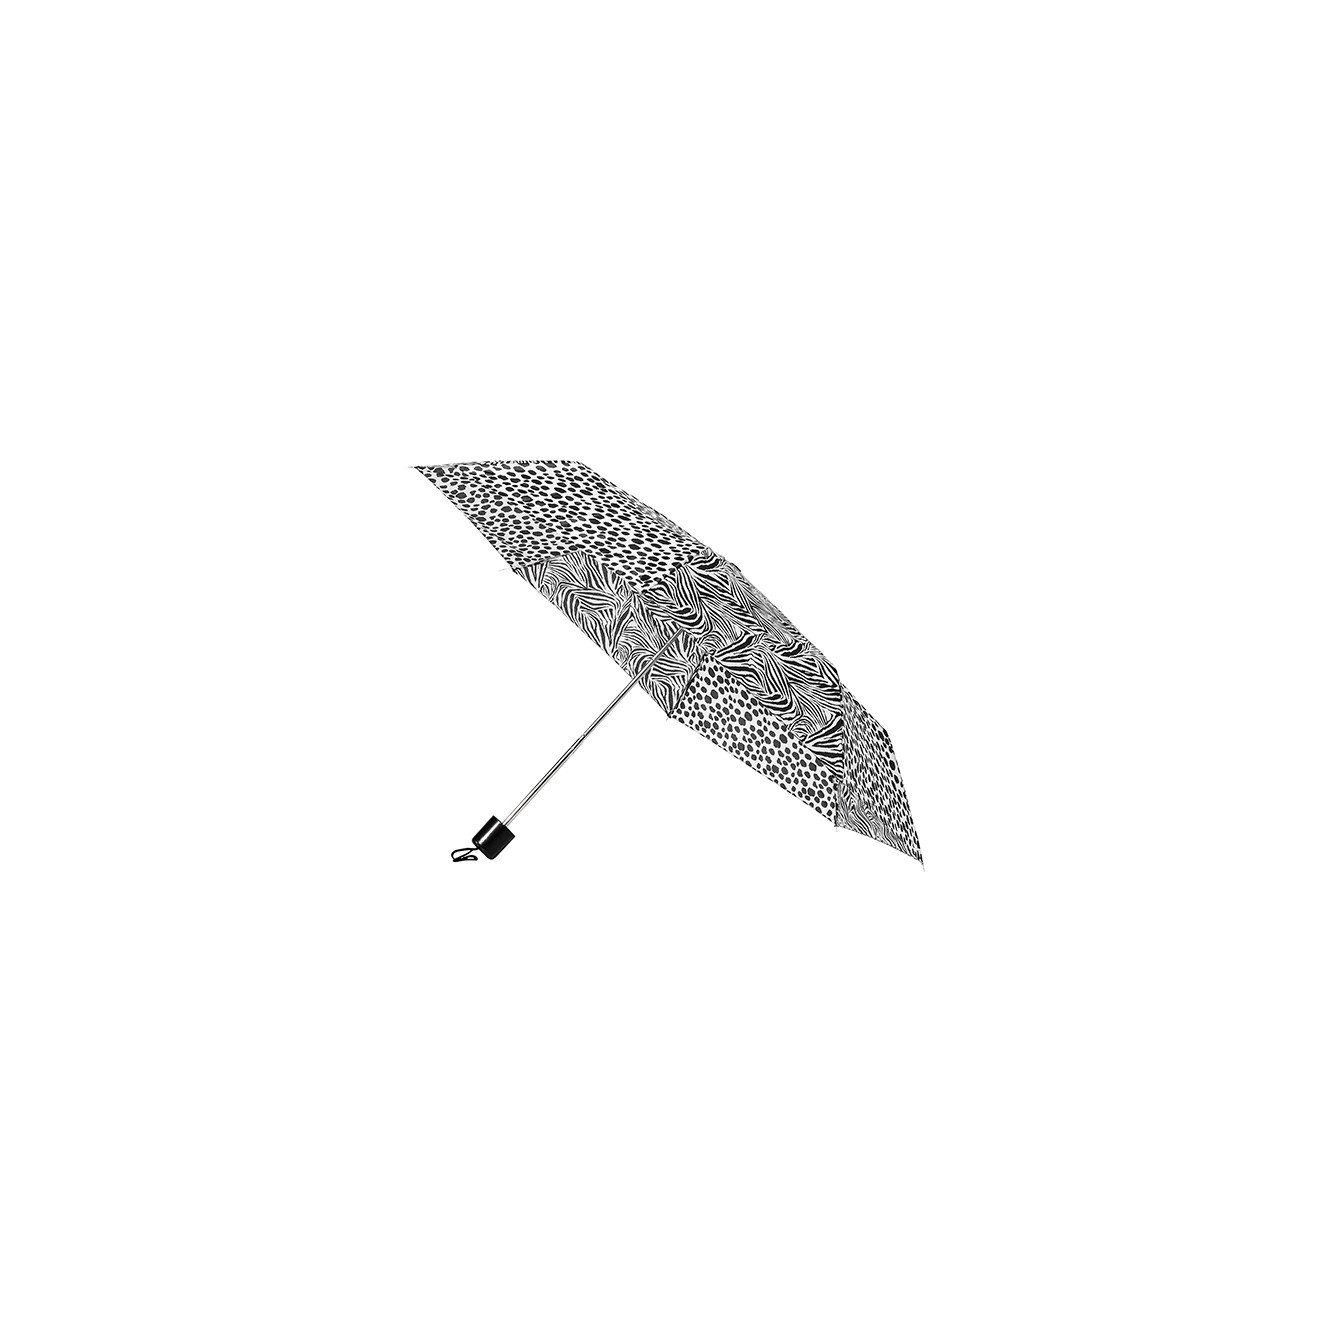 Falconetti opvouwbare paraplu